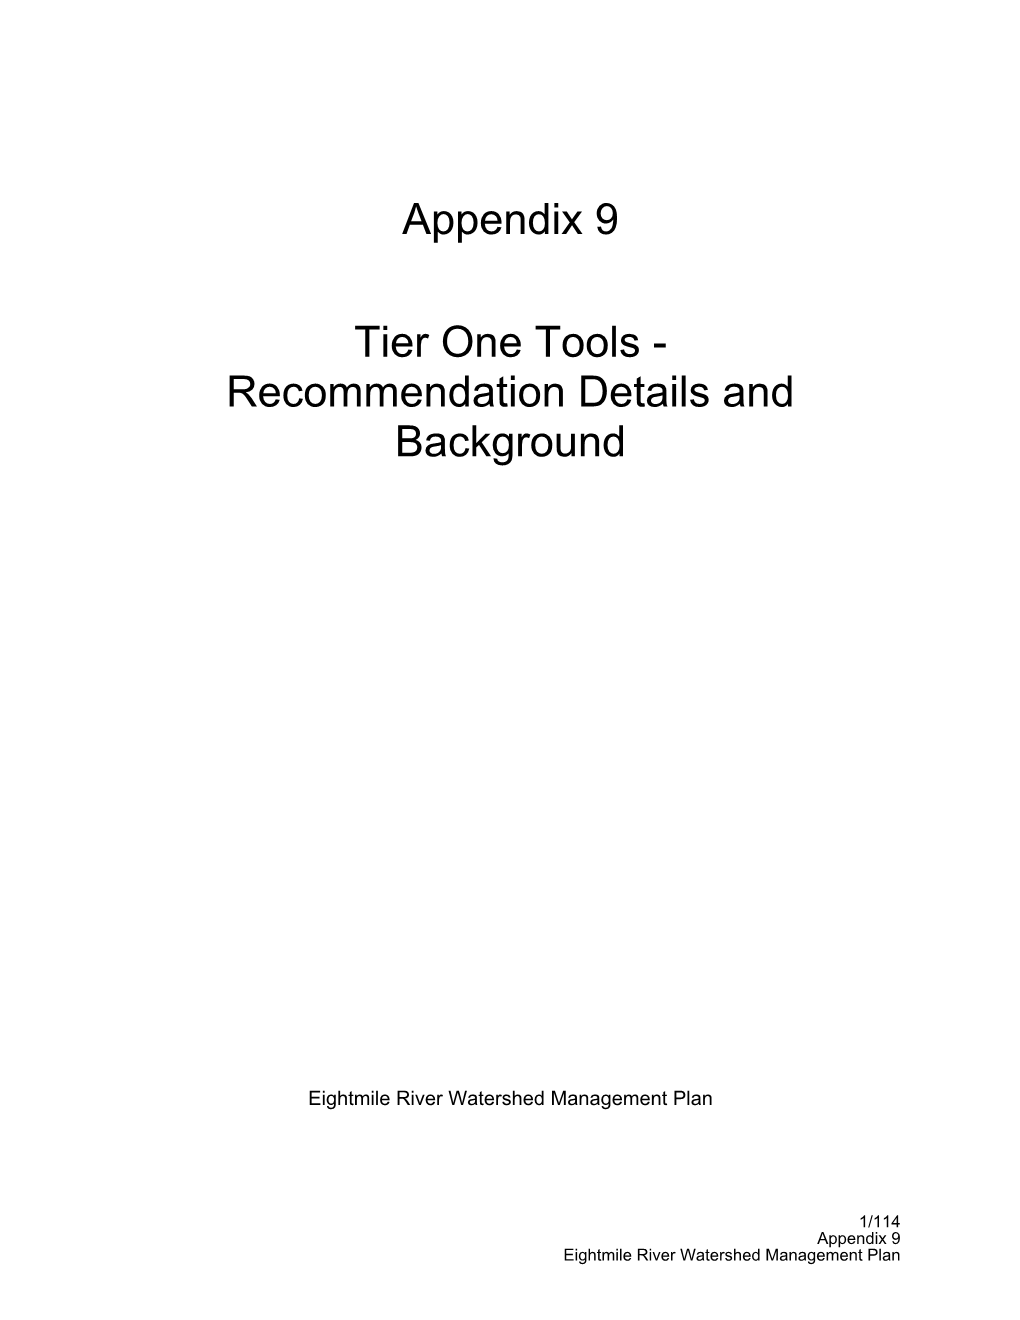 Appendix 9 Tier One Tools